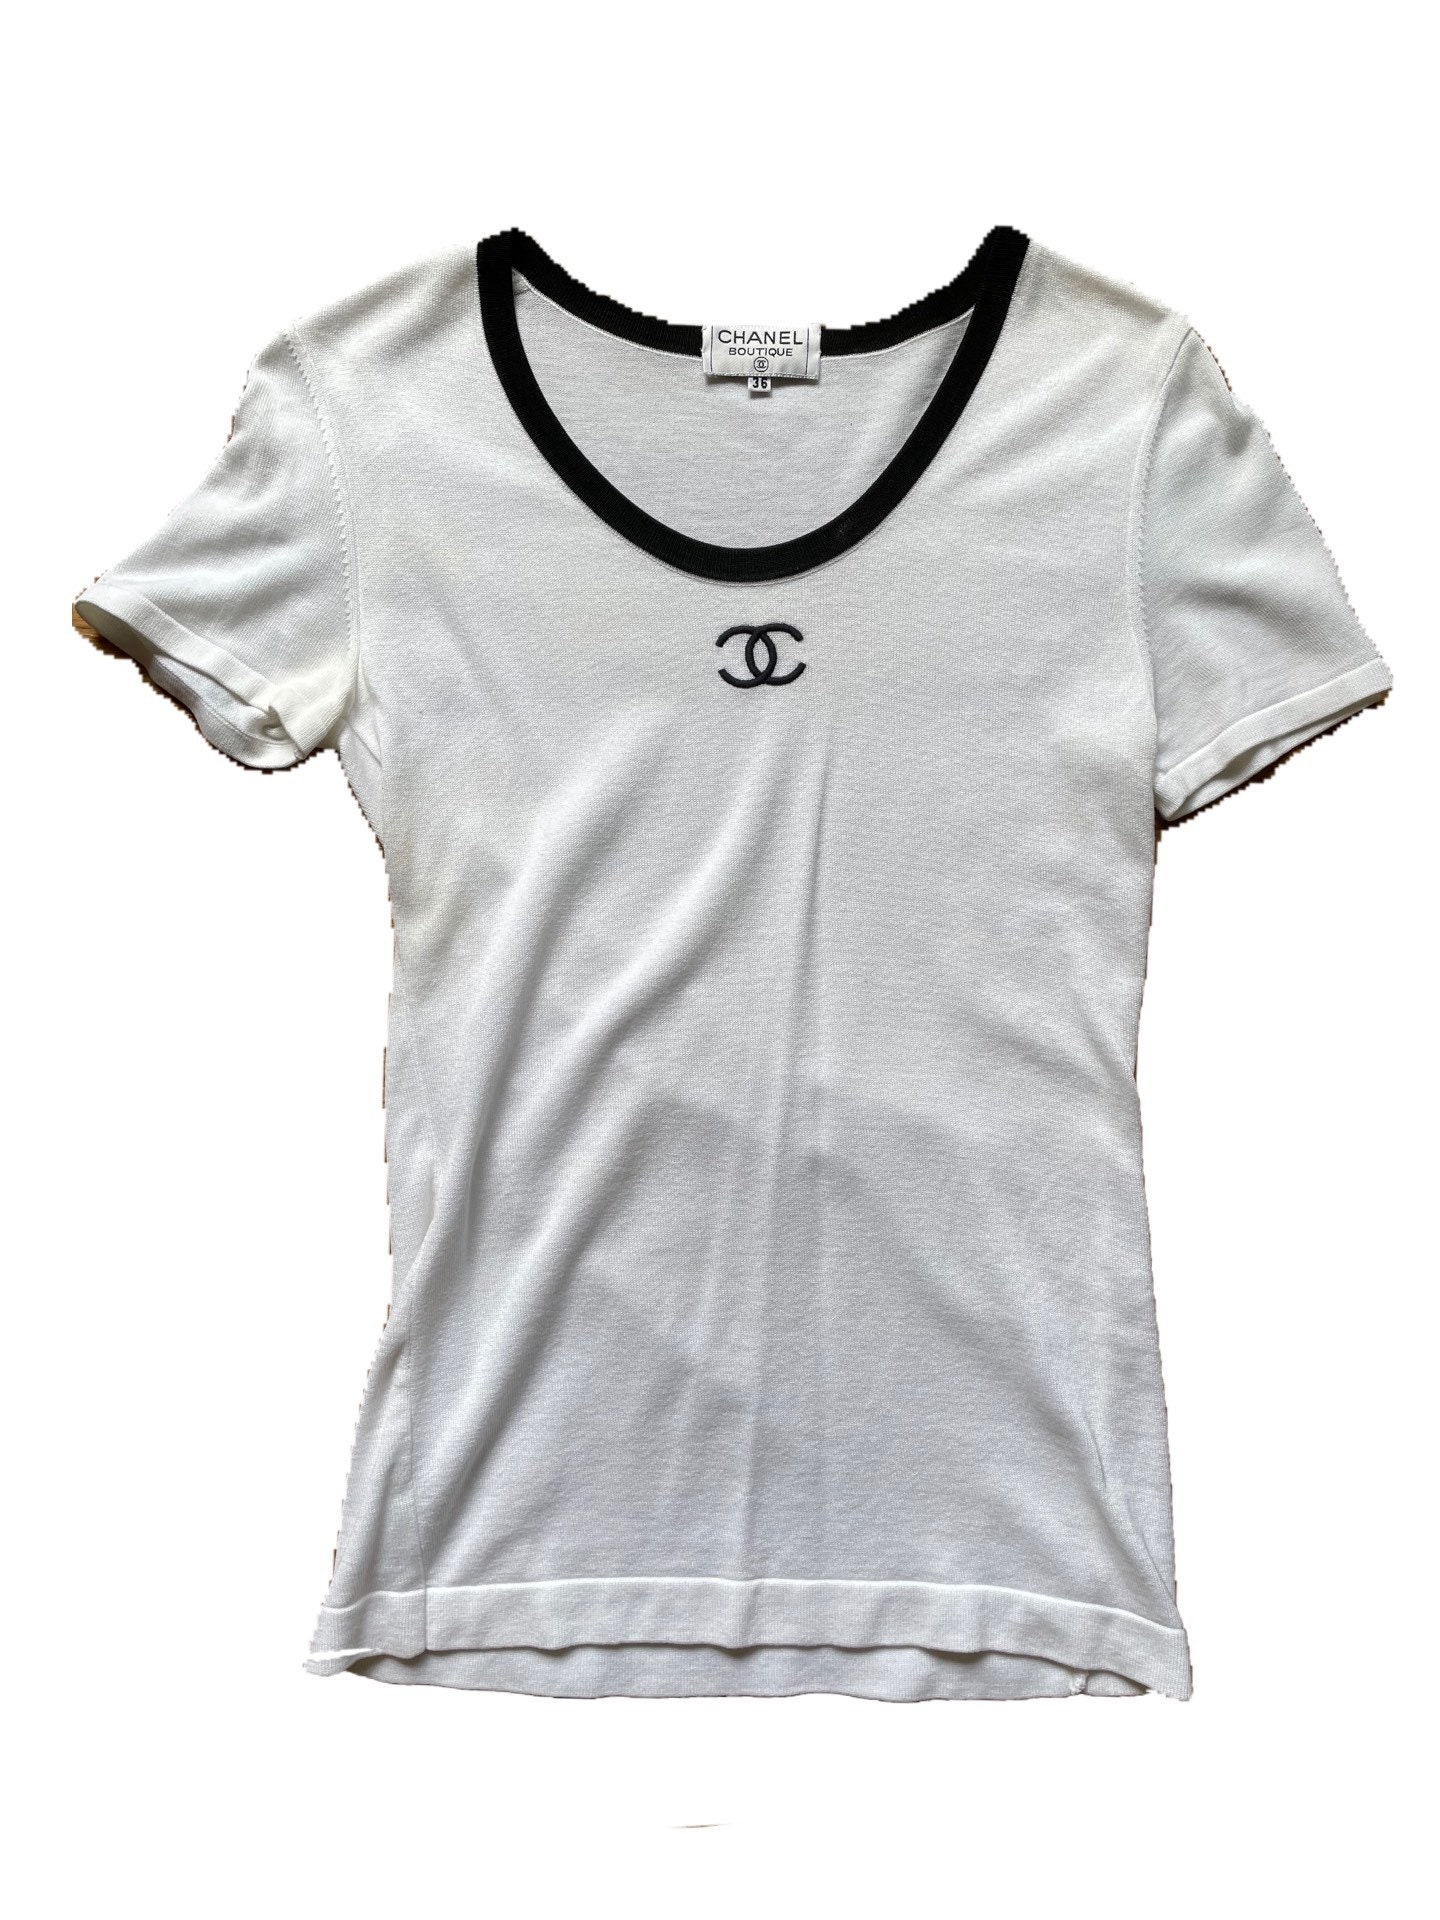 Chanel Bling T Shirt 